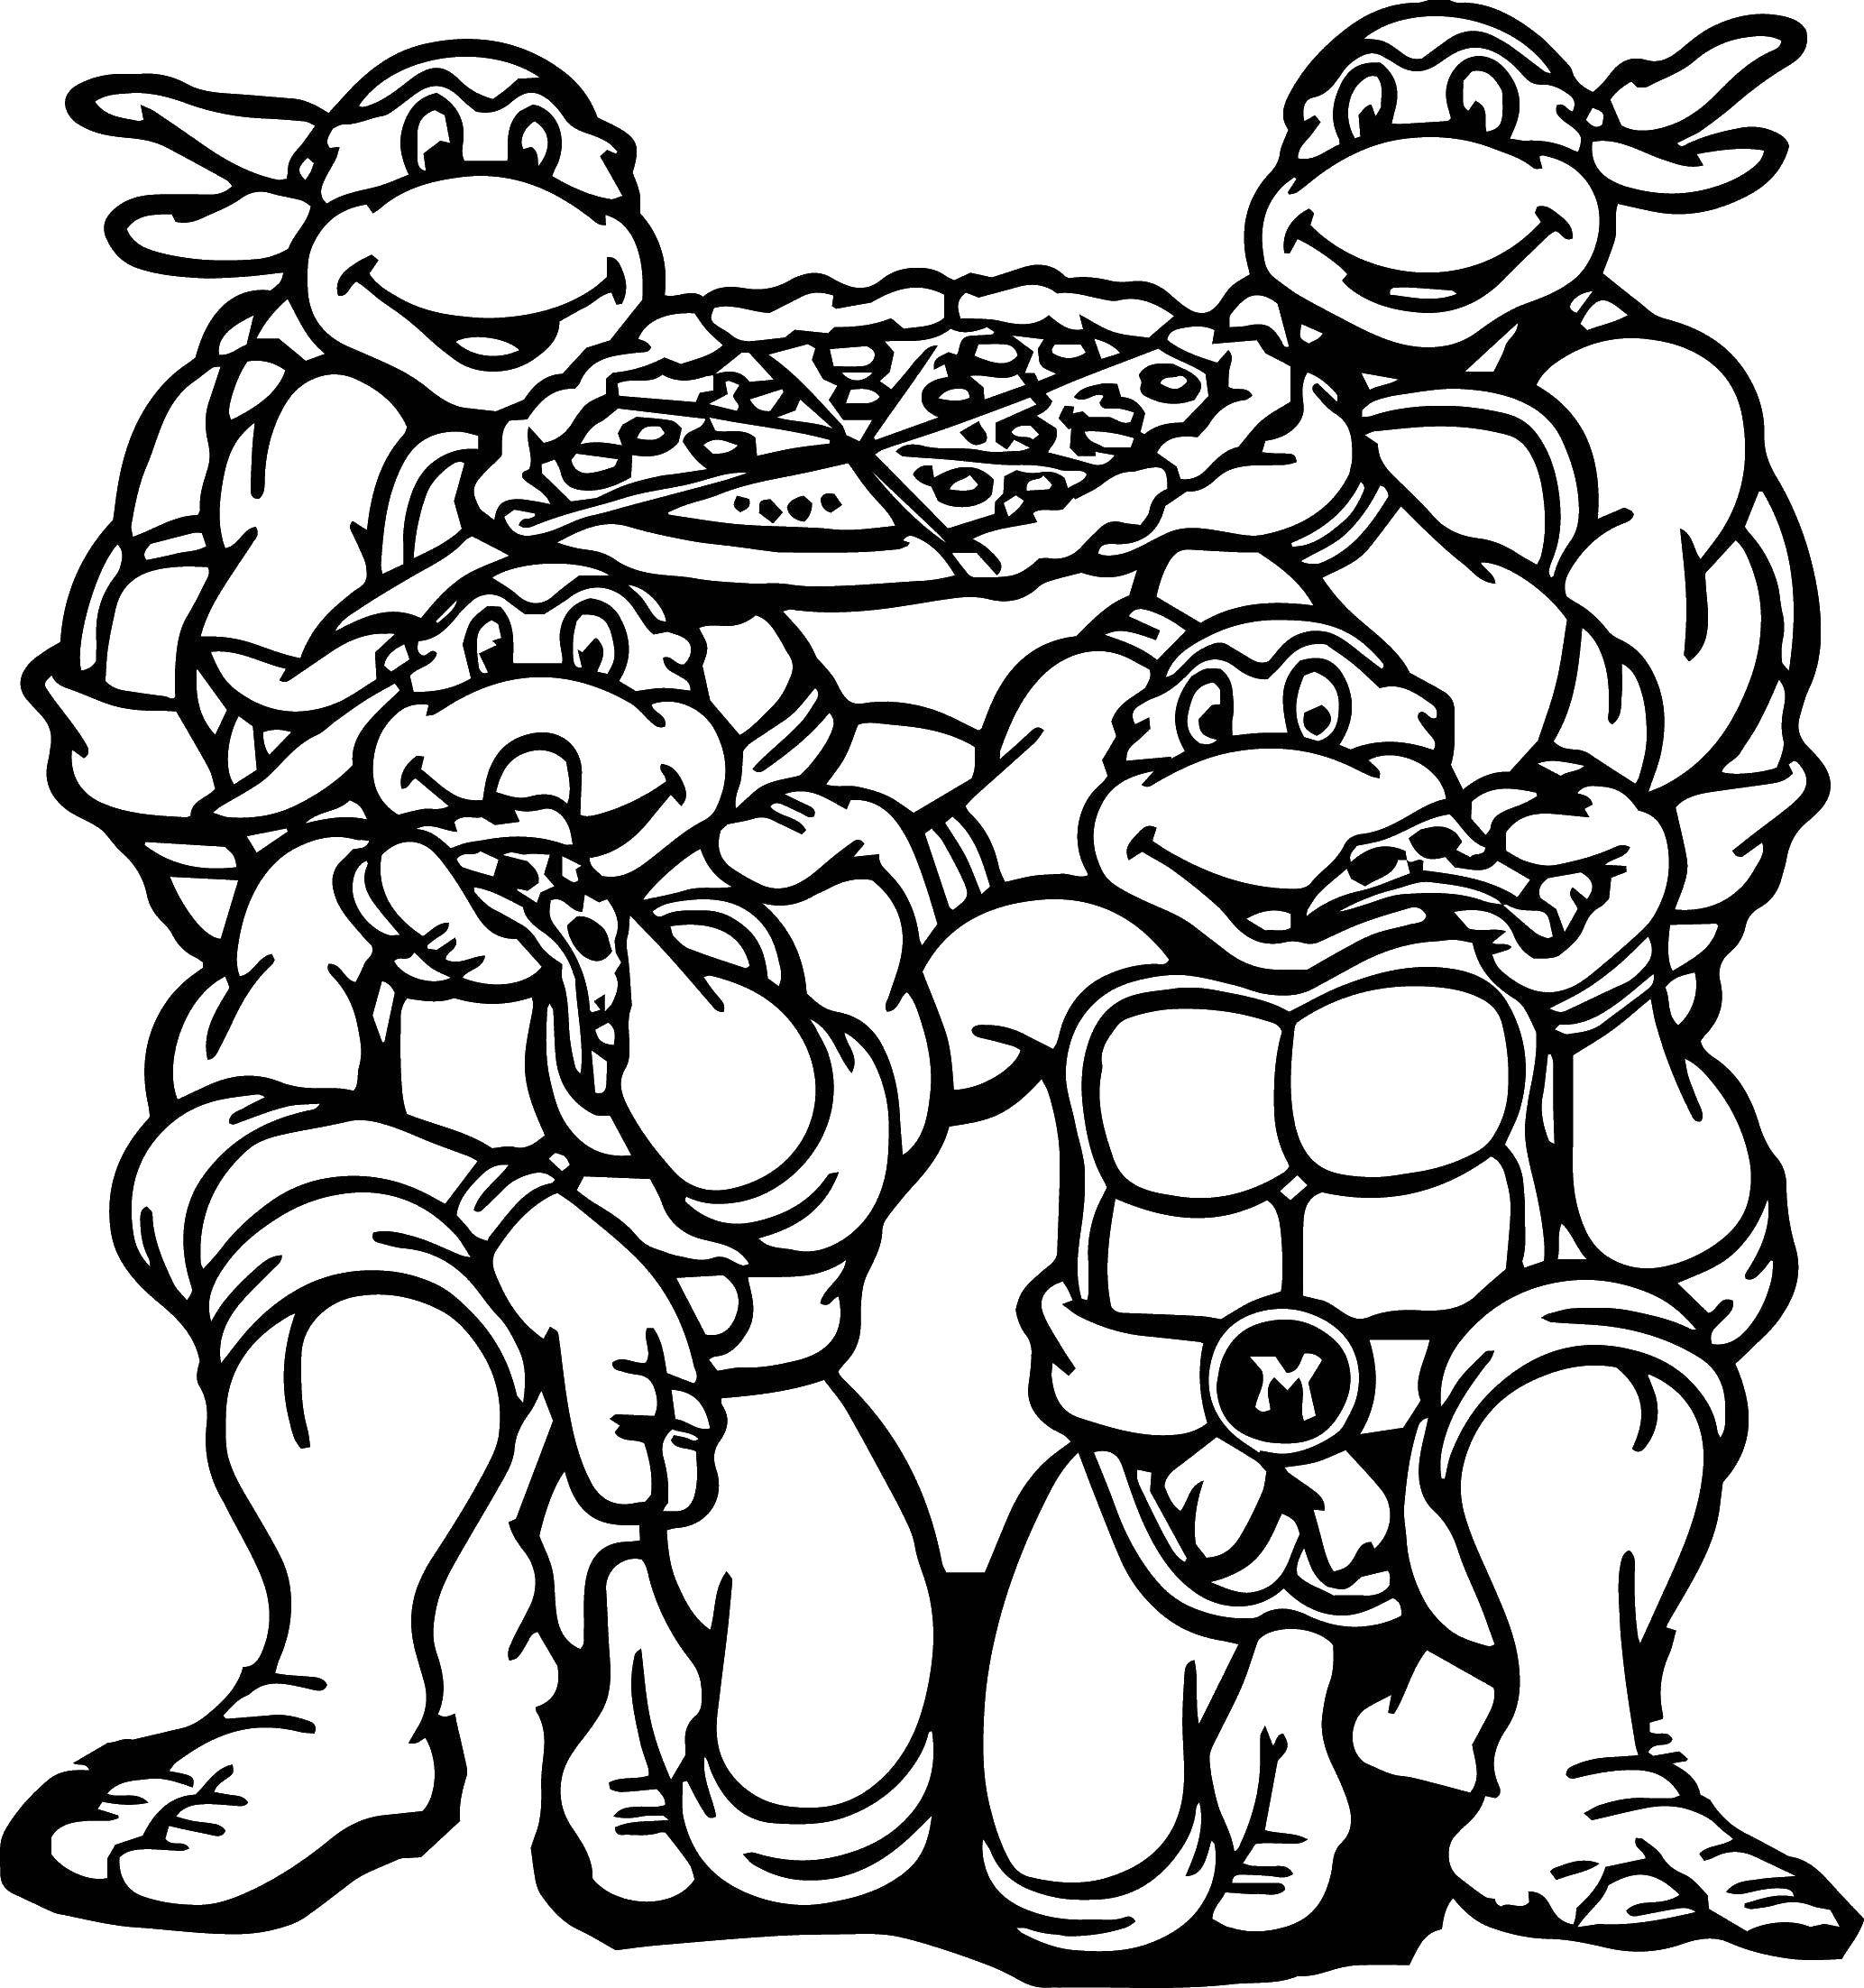 Coloring Teenage mutant ninja turtles. Category teenage mutant ninja turtles. Tags:  cartoon ninja turtles.